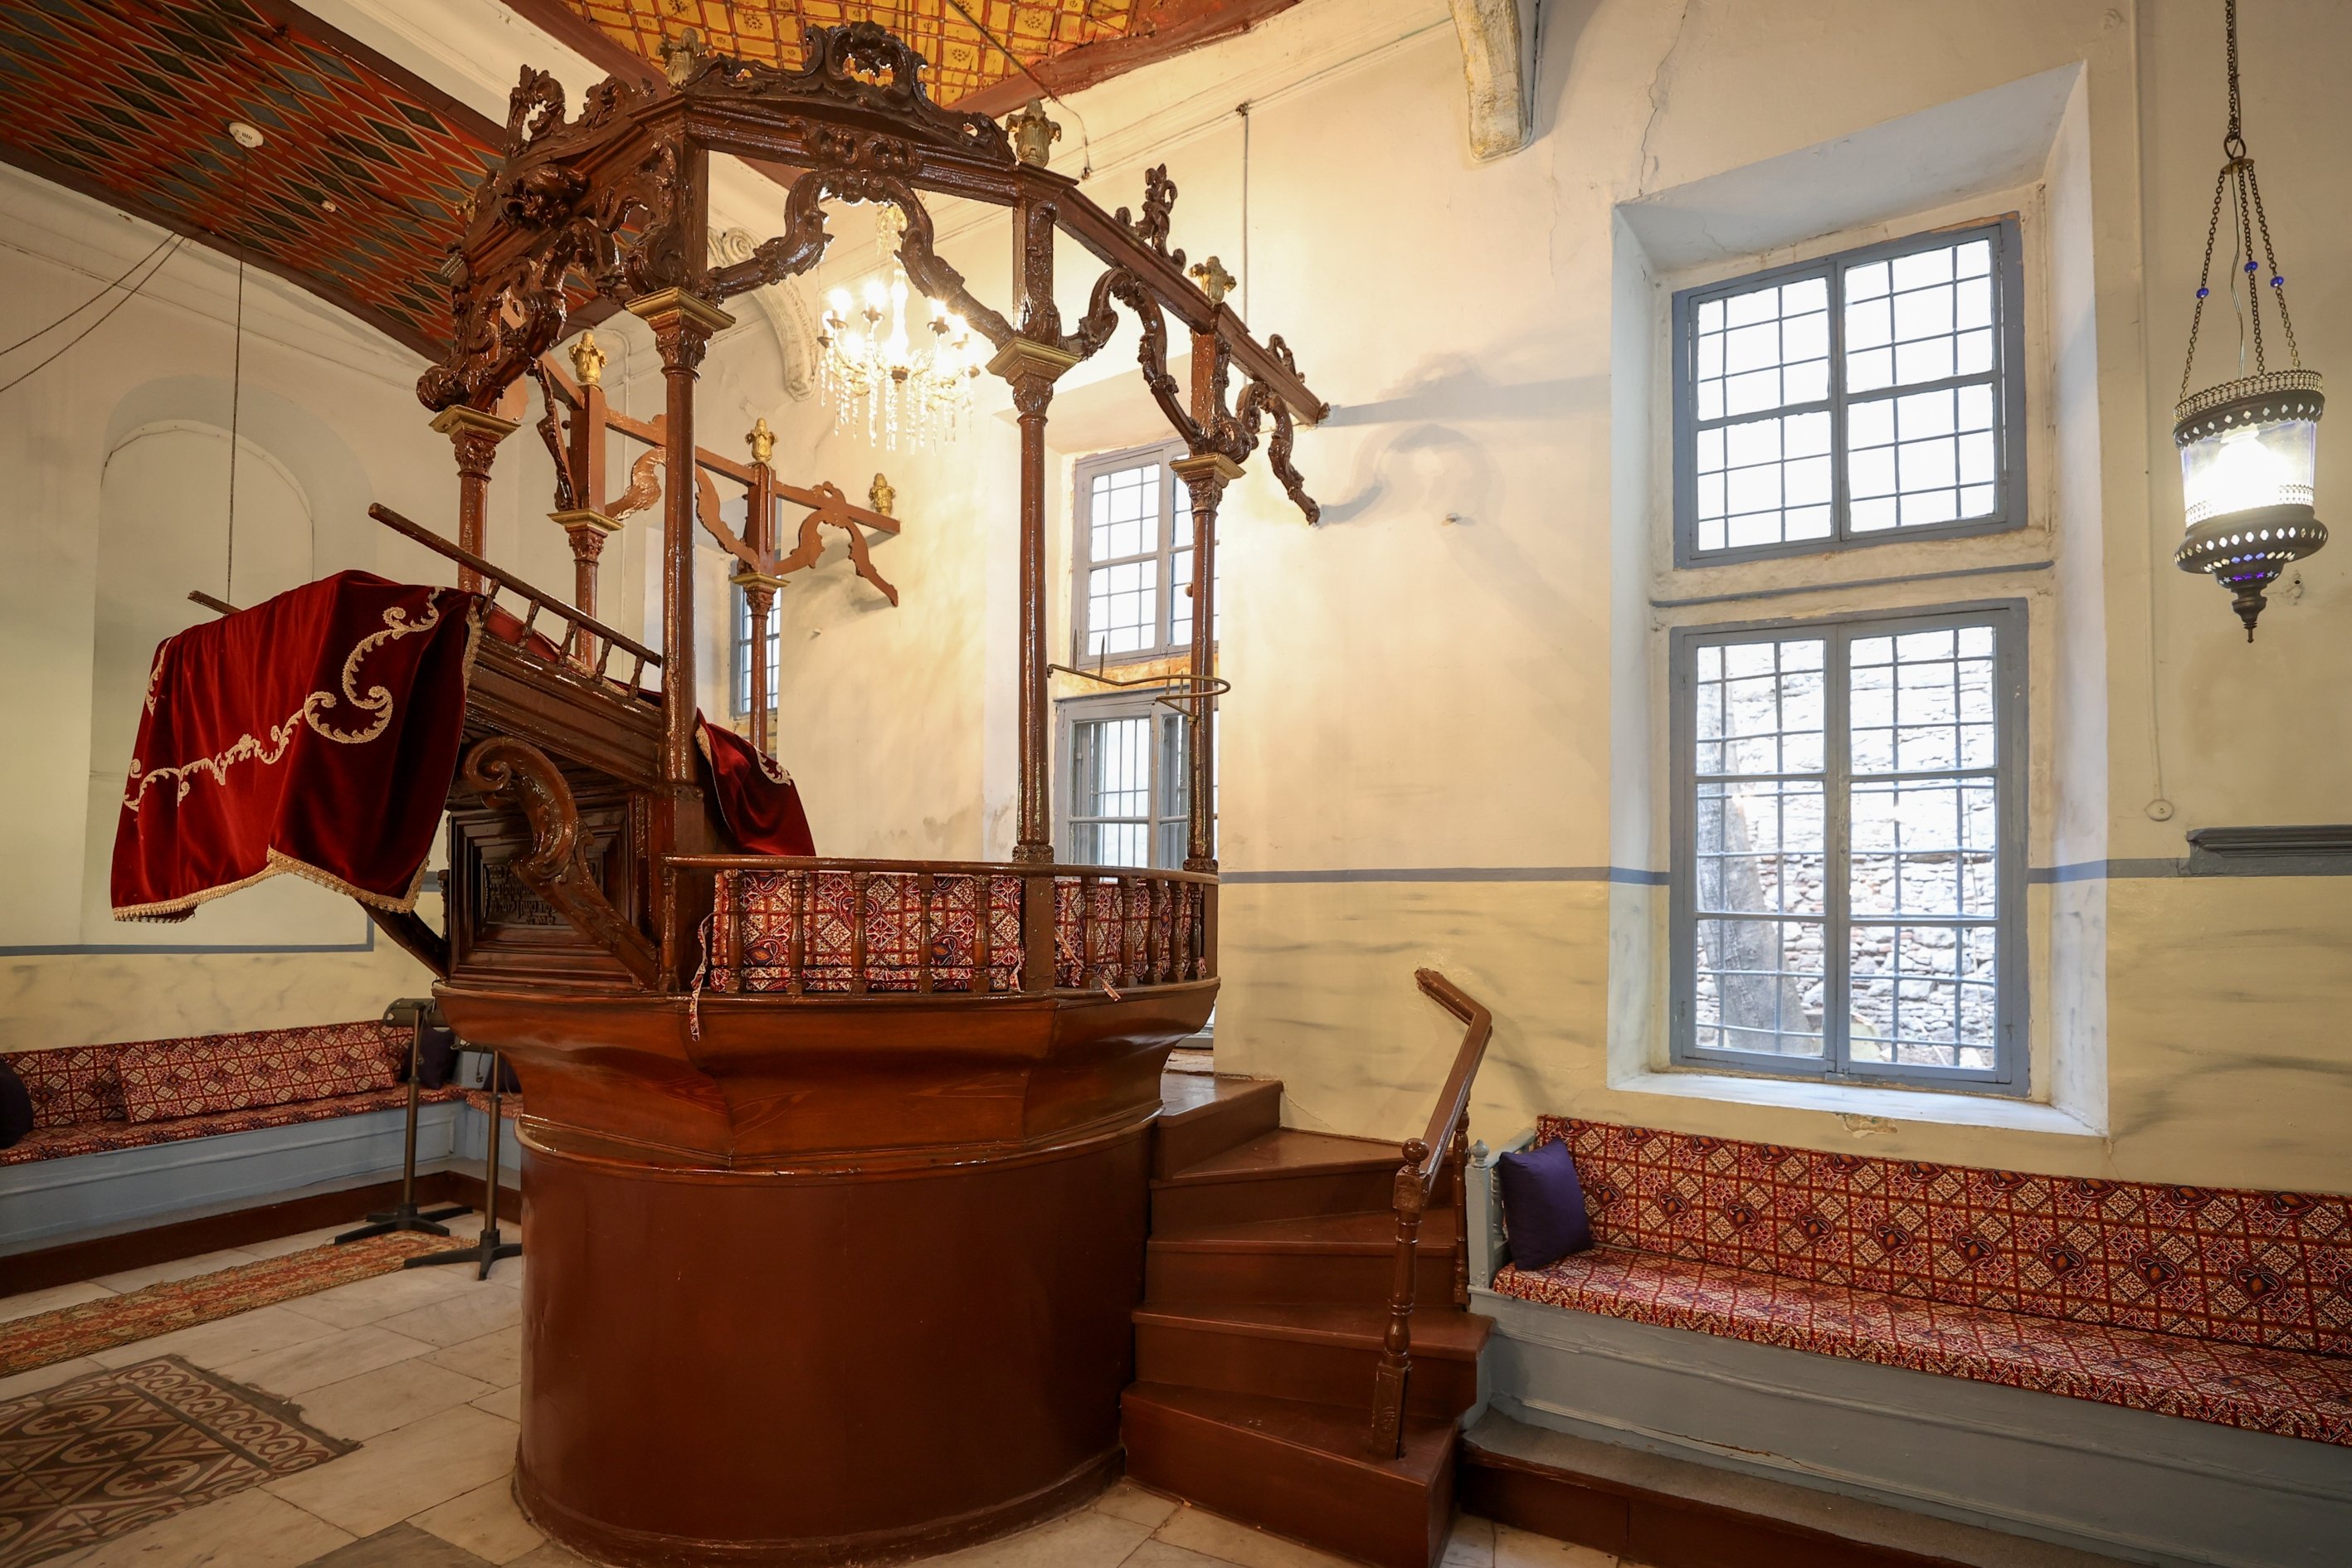 An interior view from the Şalom Synagogue, Izmir, Turkey, Jan. 24, 2022. (AA)